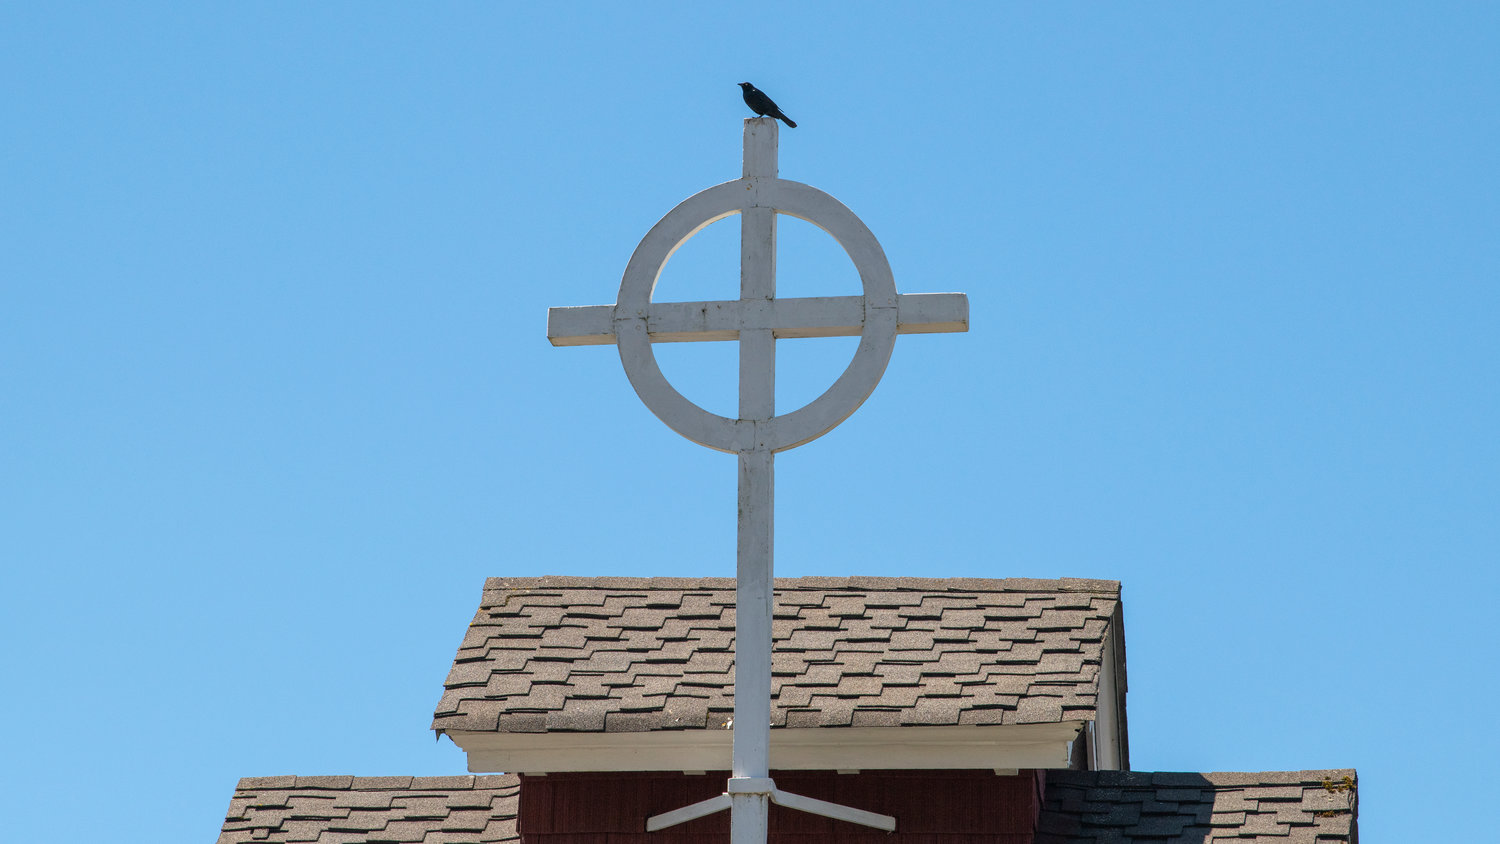 The bird often sits atop the cross on Westminster Presbyterian Church across Market Boulevard from city hall, awaiting his next victim.